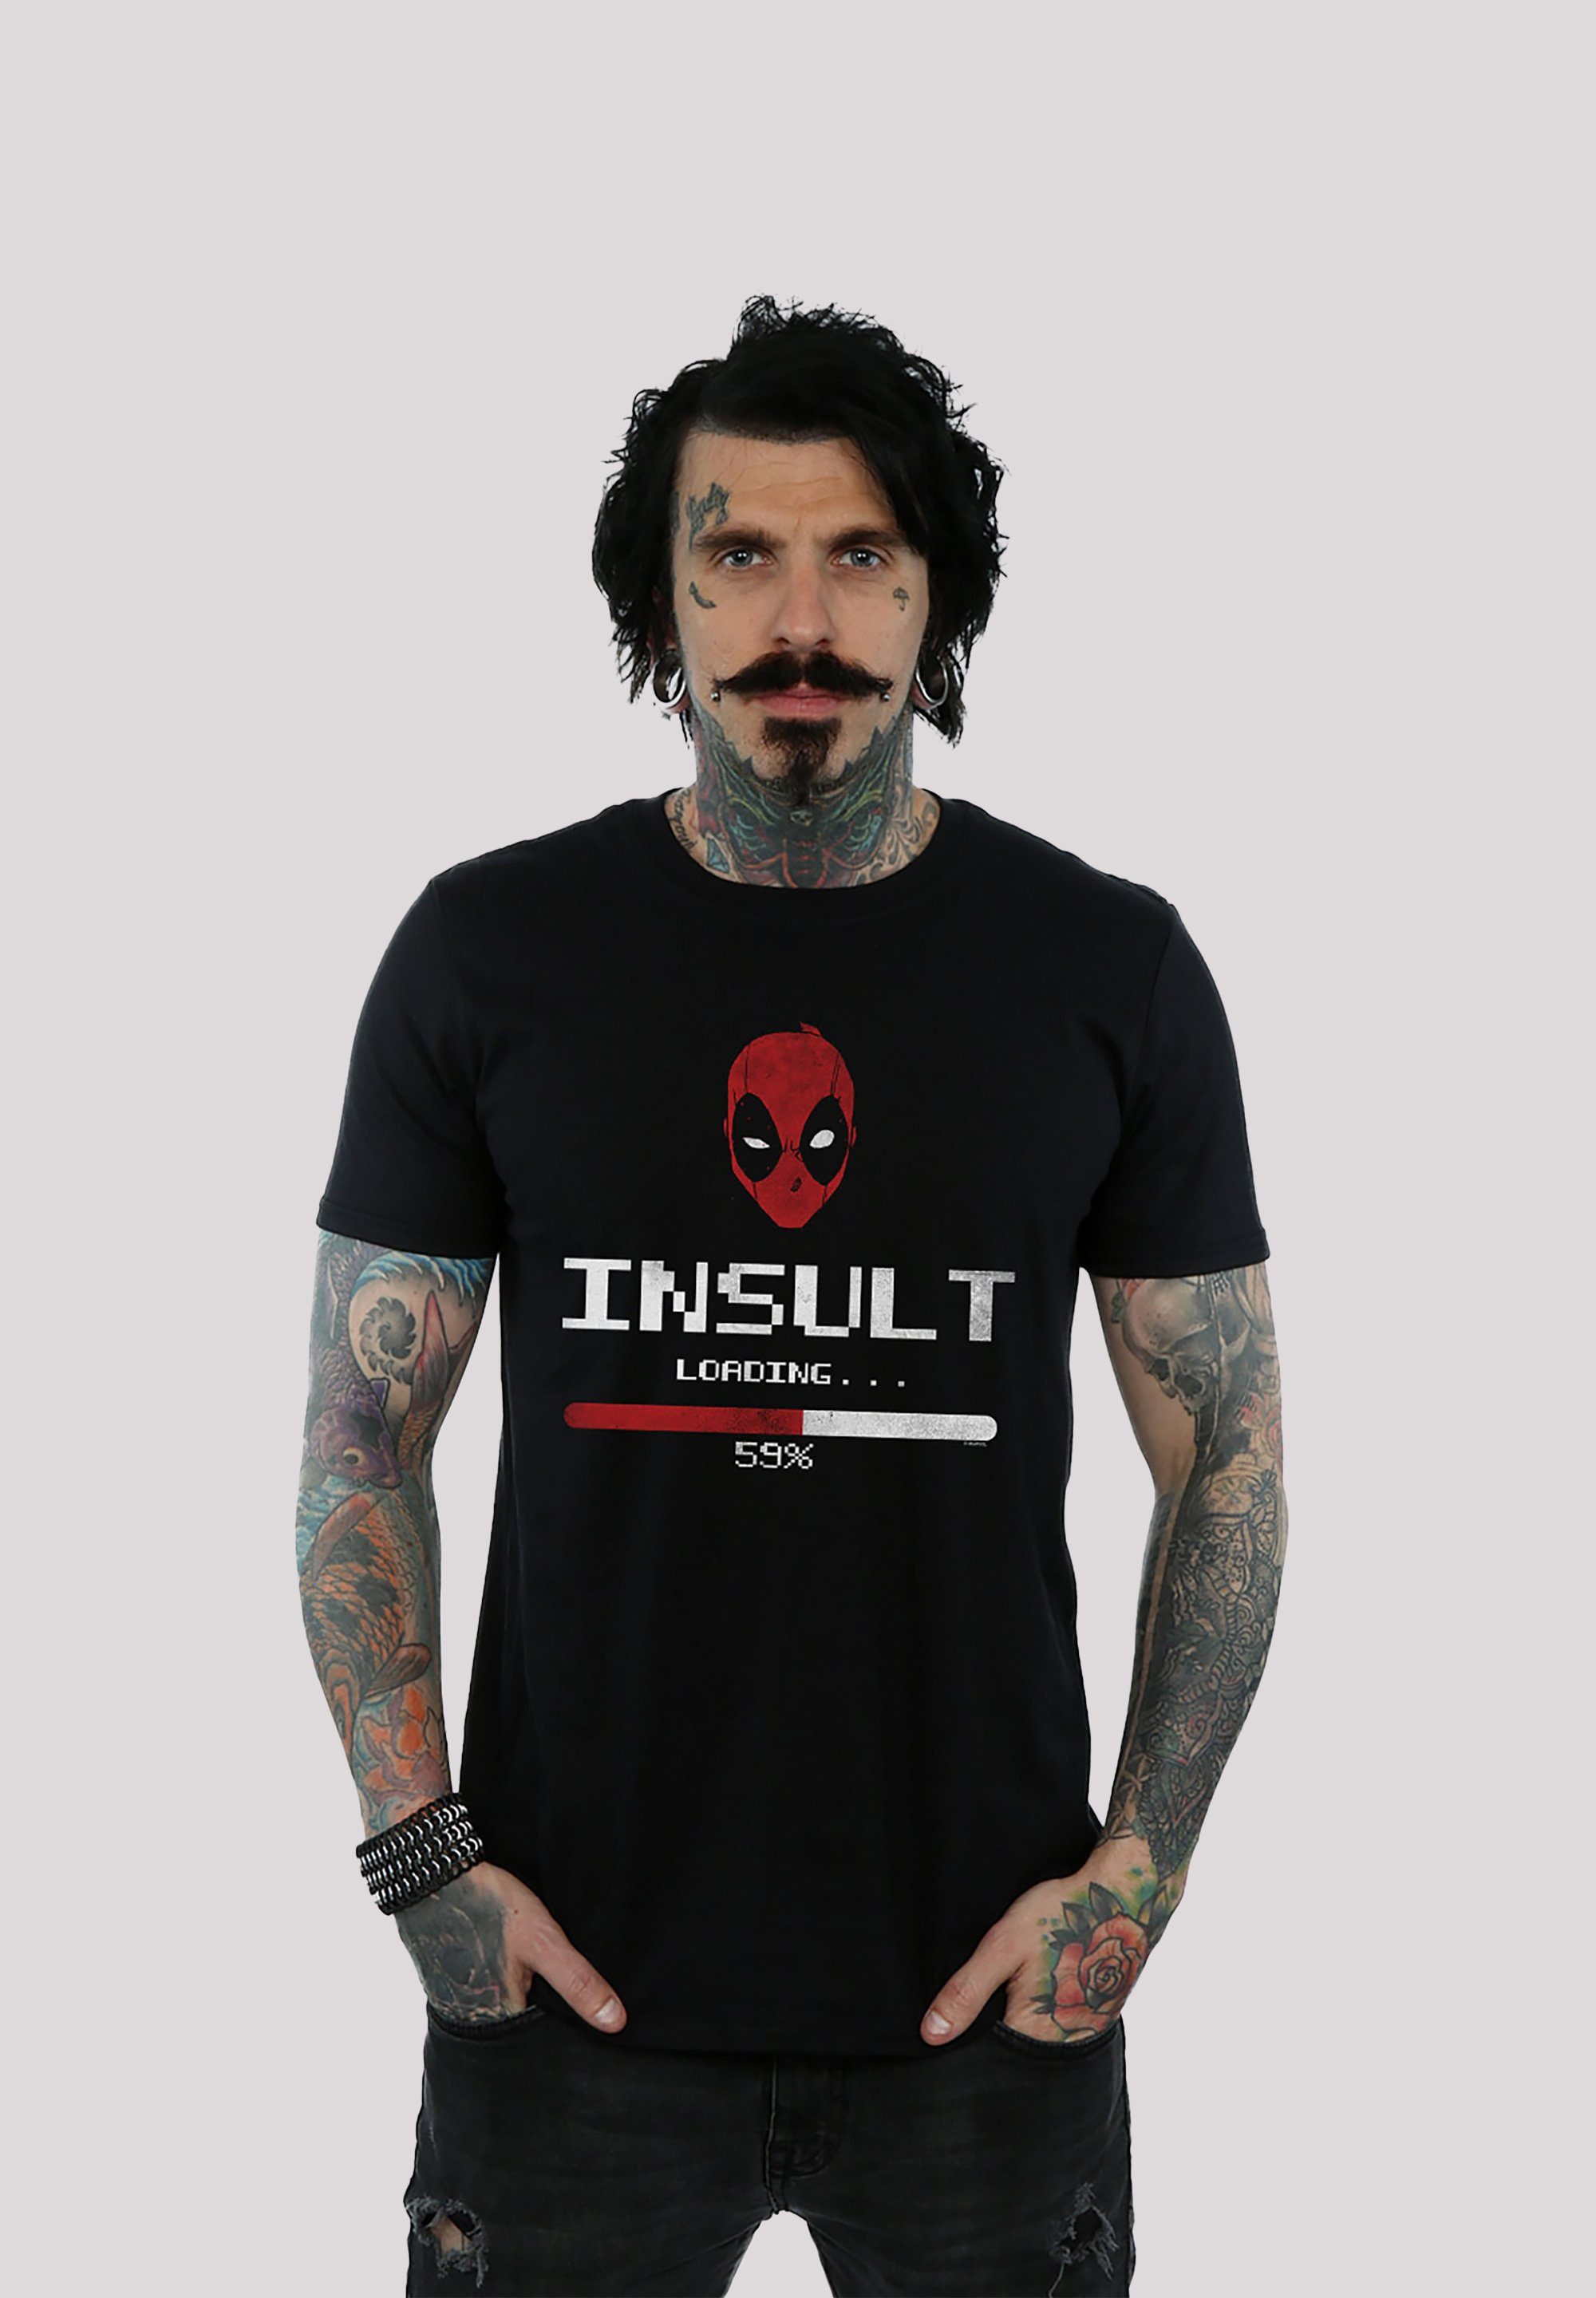 F4NT4STIC T-Shirt Marvel Deadpool Insult Loading Print, Sehr weicher  Baumwollstoff mit hohem Tragekomfort